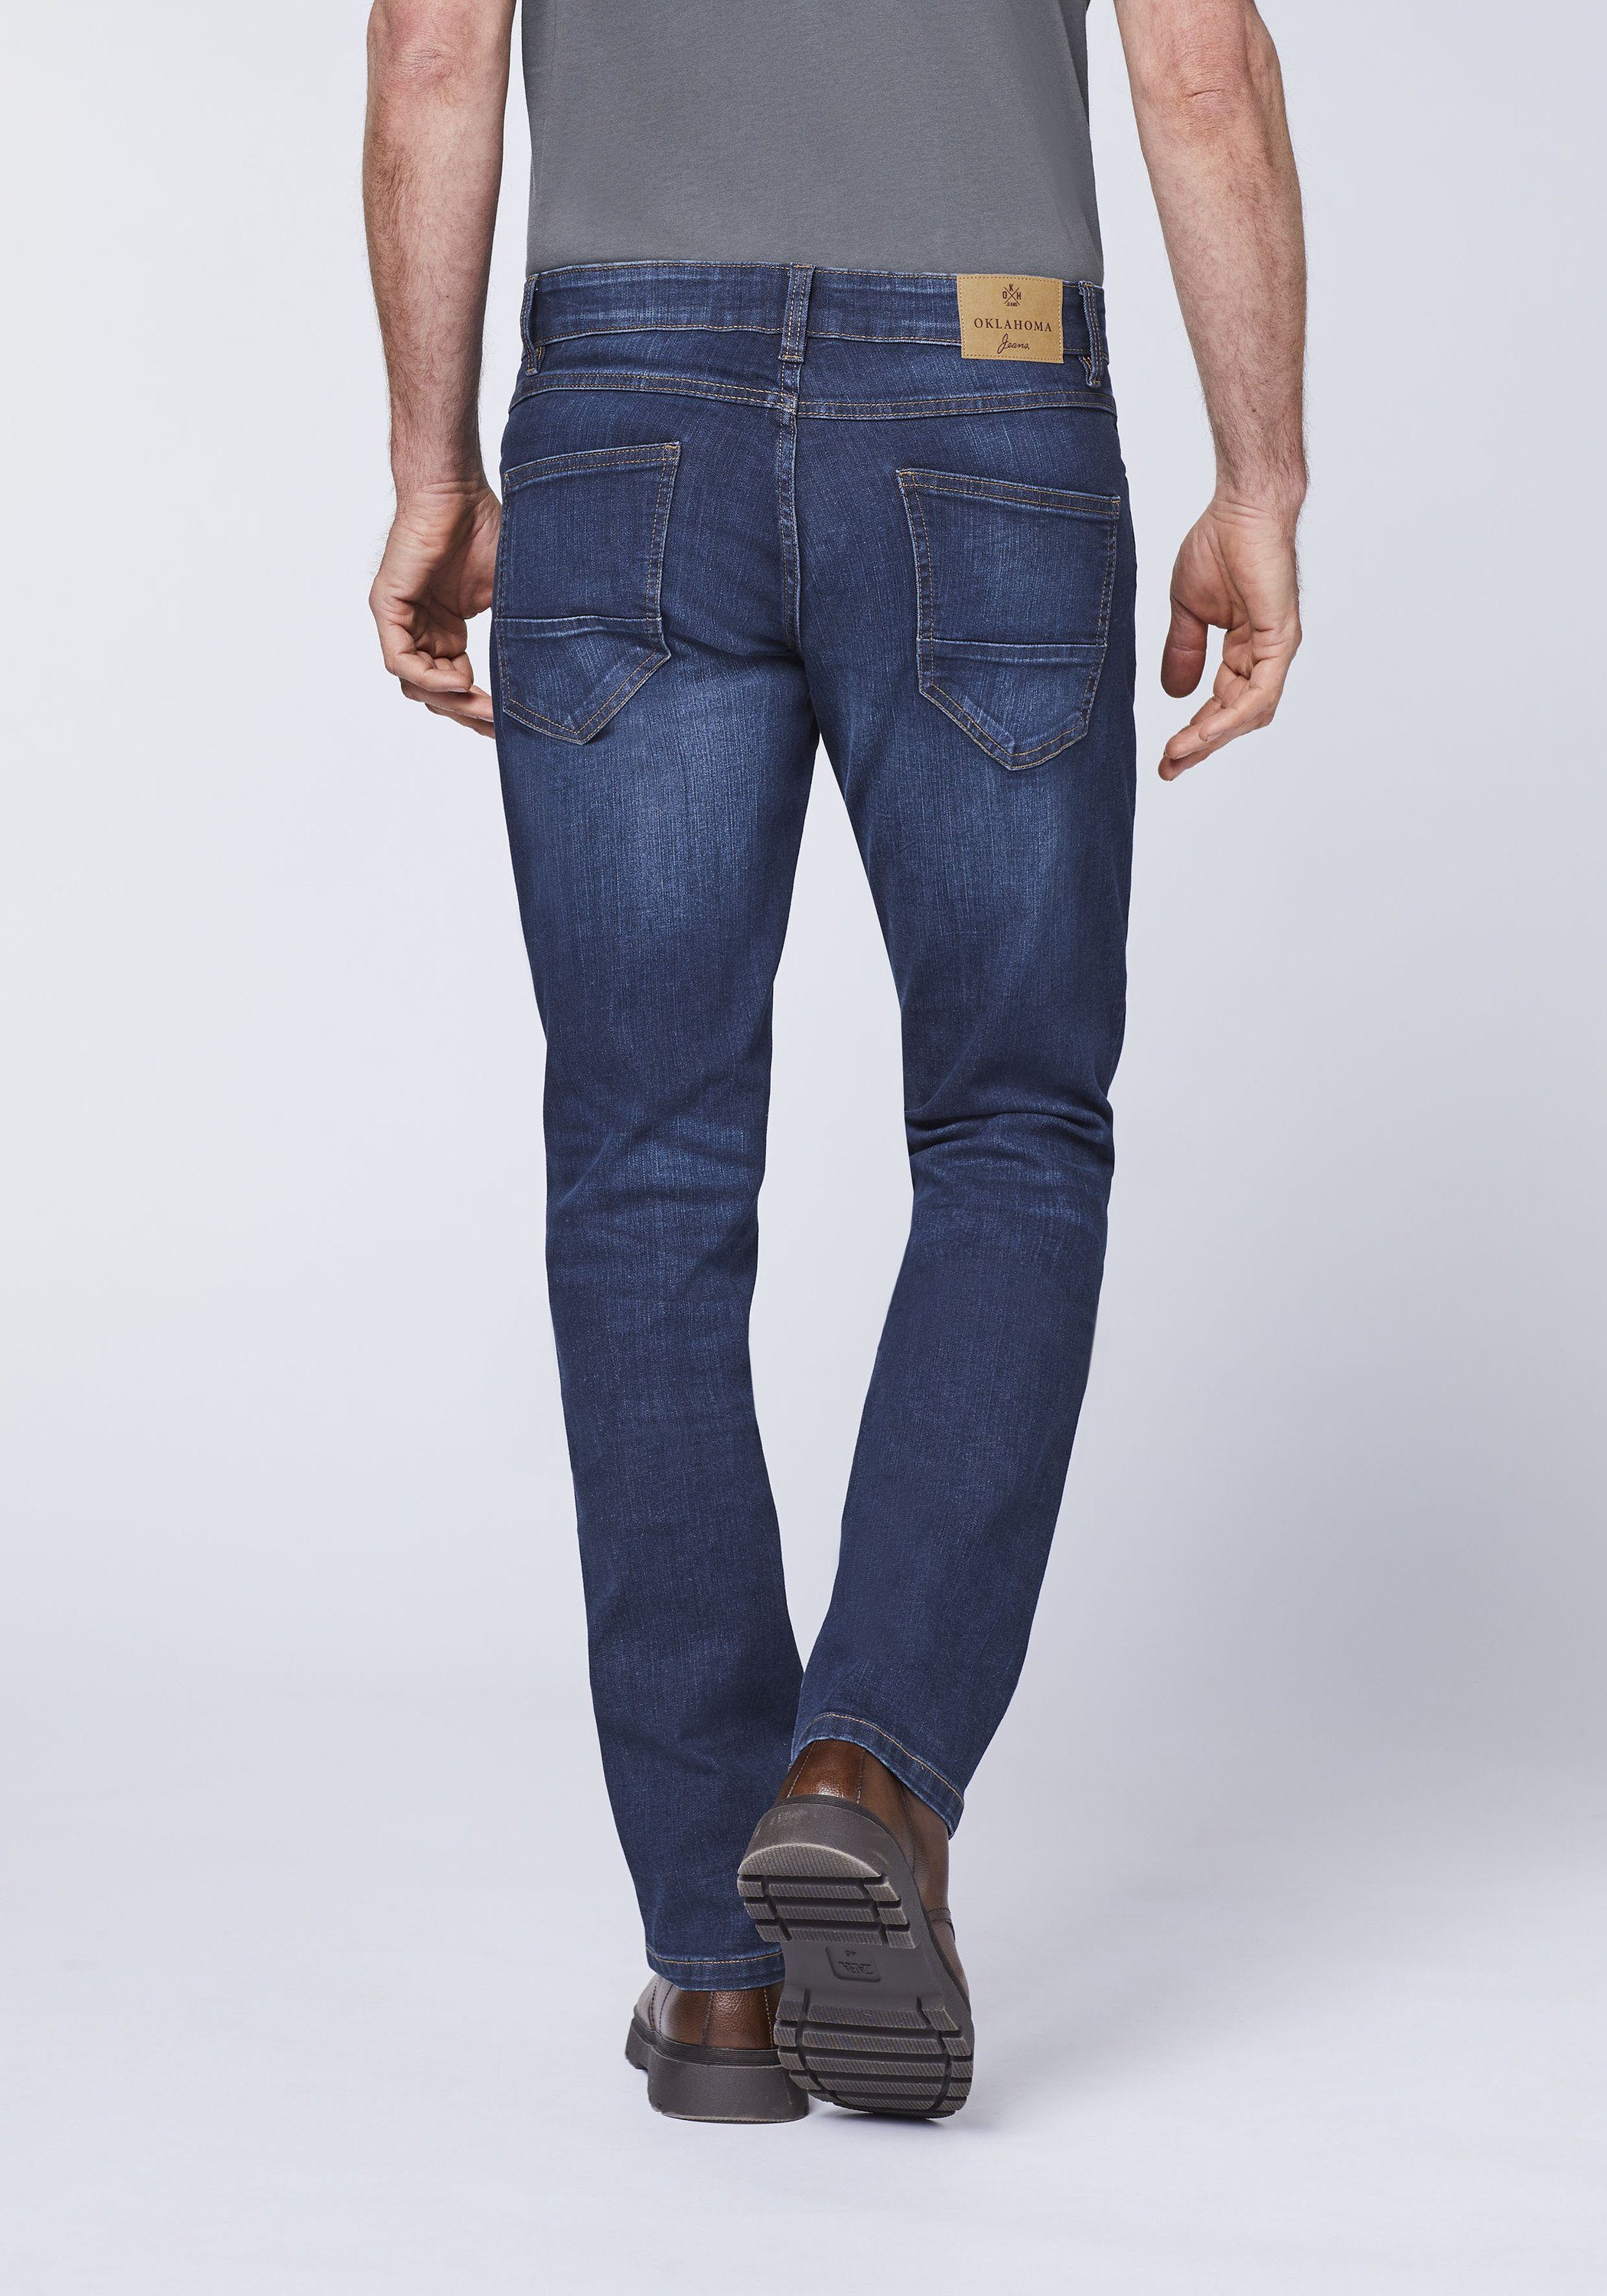 Oklahoma Jeans weichem Denim aus Slim-fit-Jeans